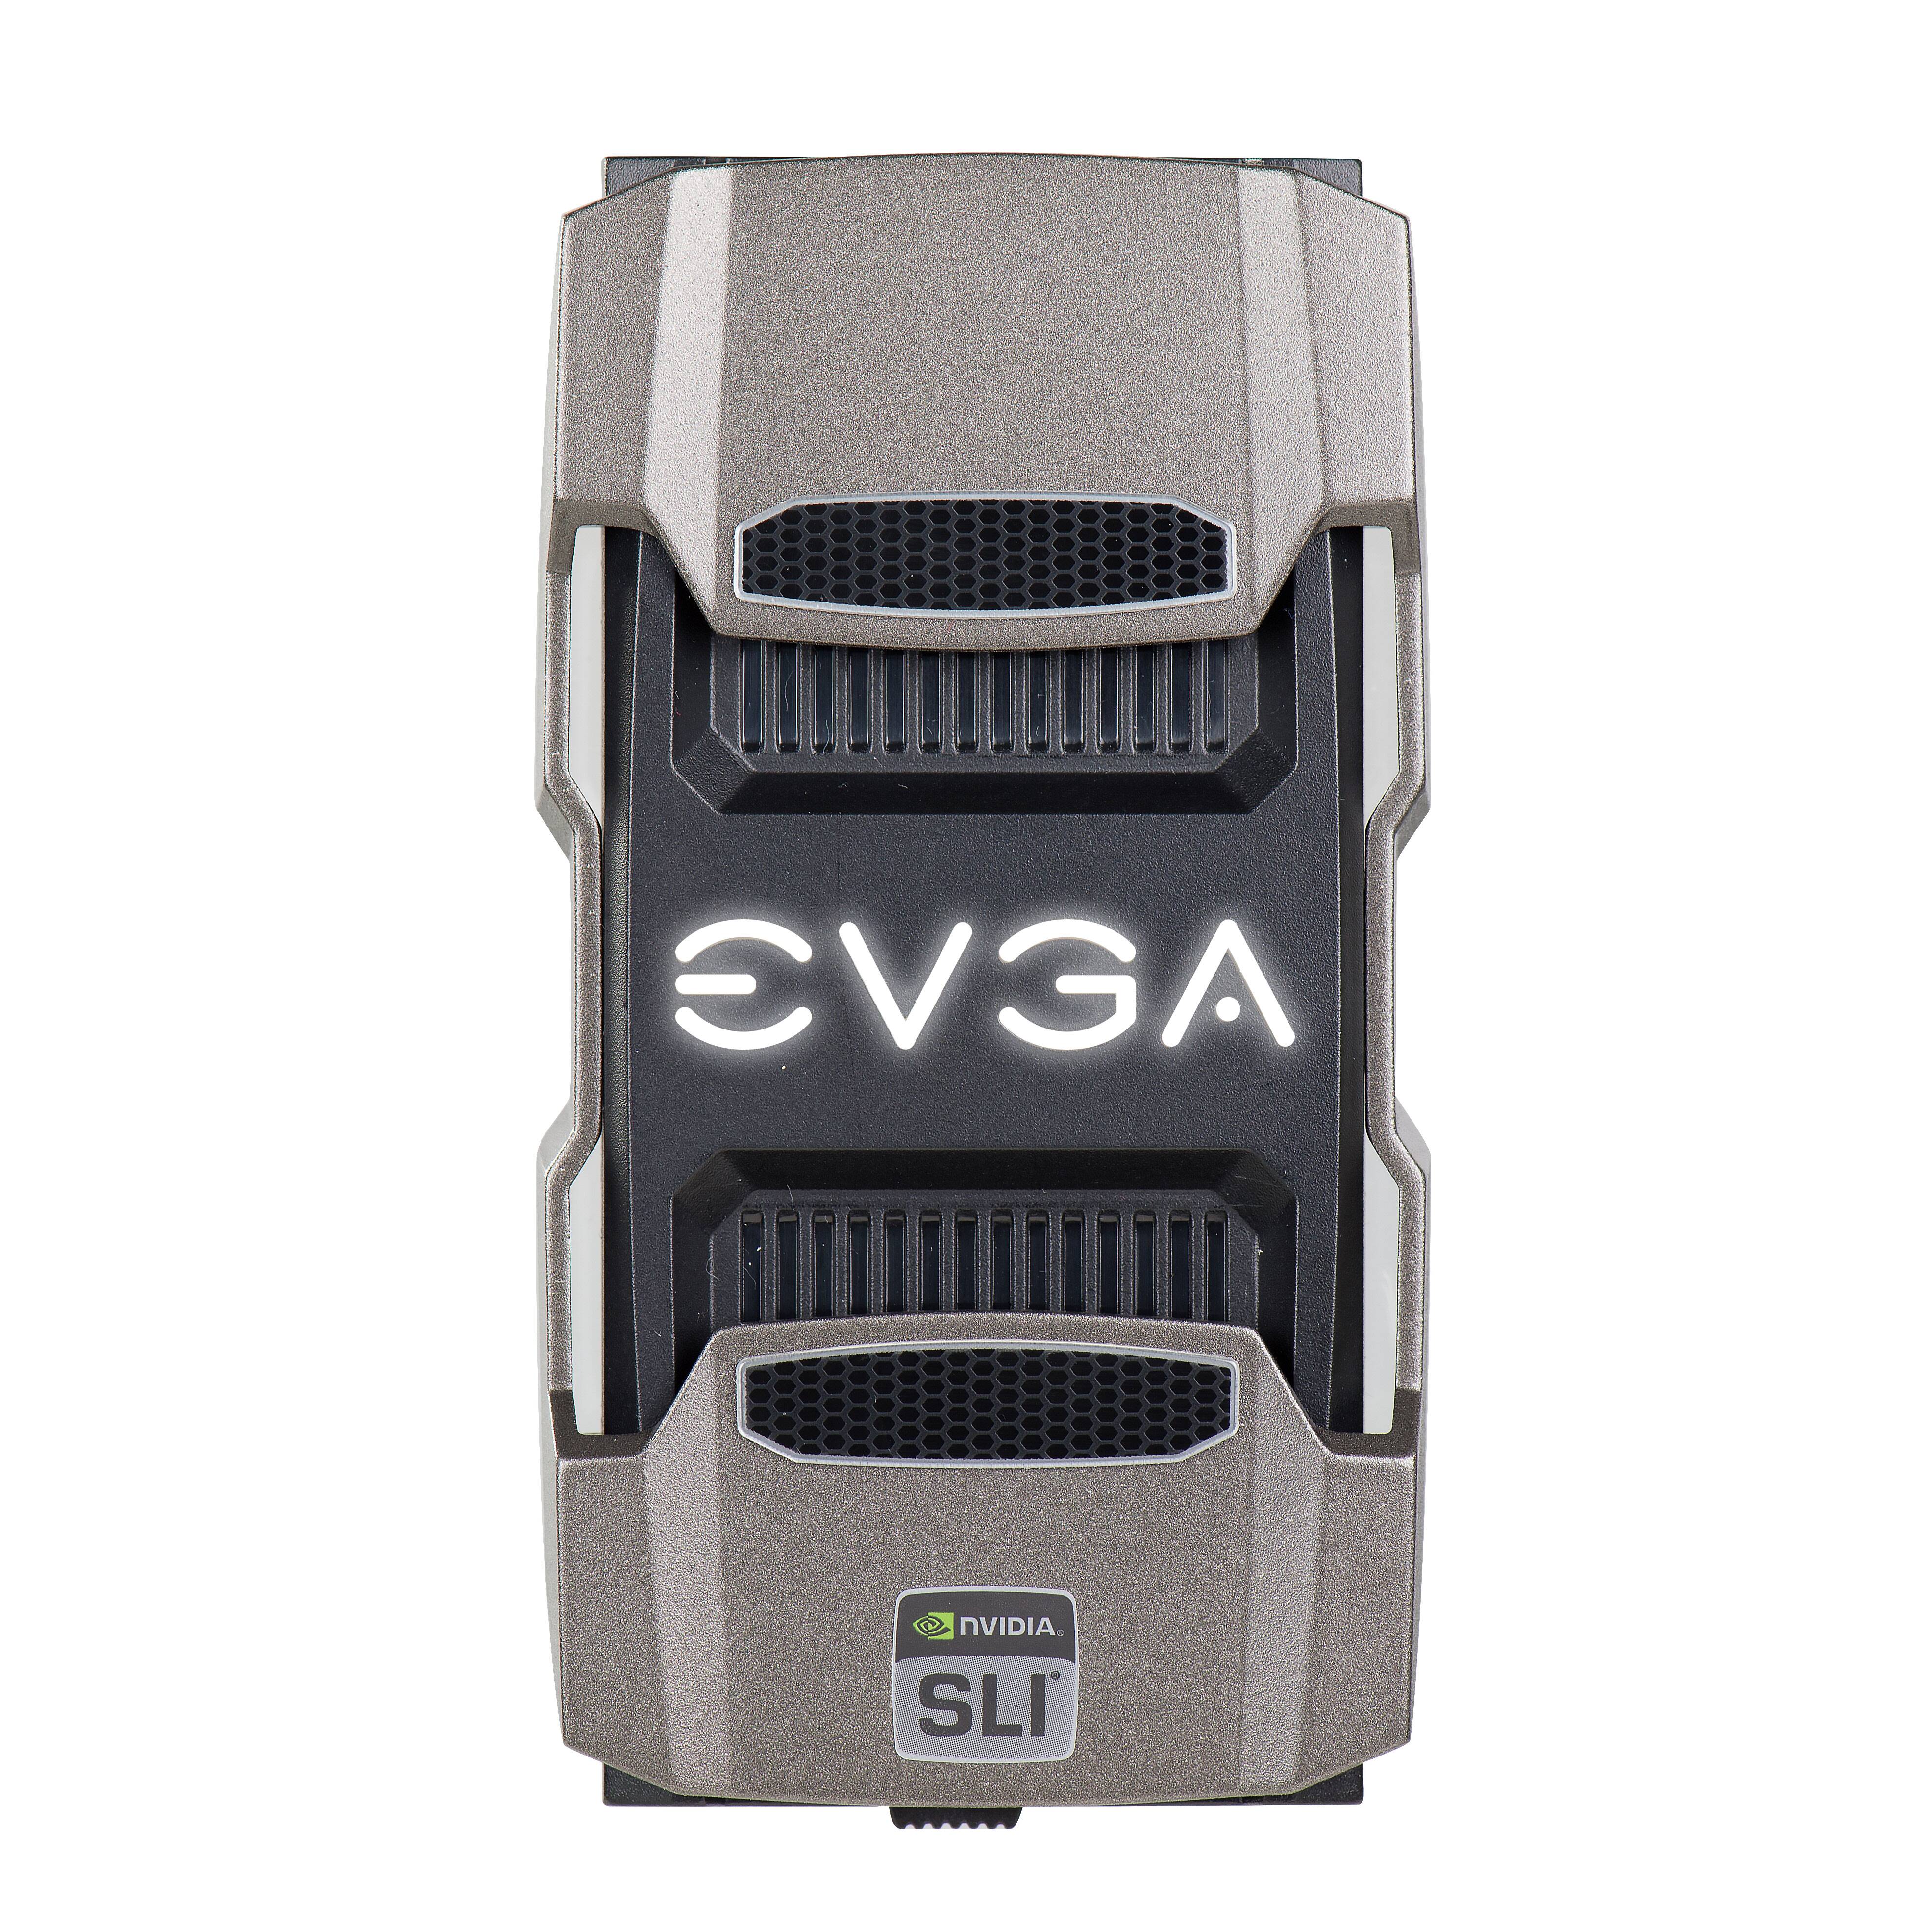 EVGA - JP - 製品- EVGA SLI HB, 2 Spacing, LED with 4 Preset Colors, 100-2W-0027-LR - 100-2W-0027-LR